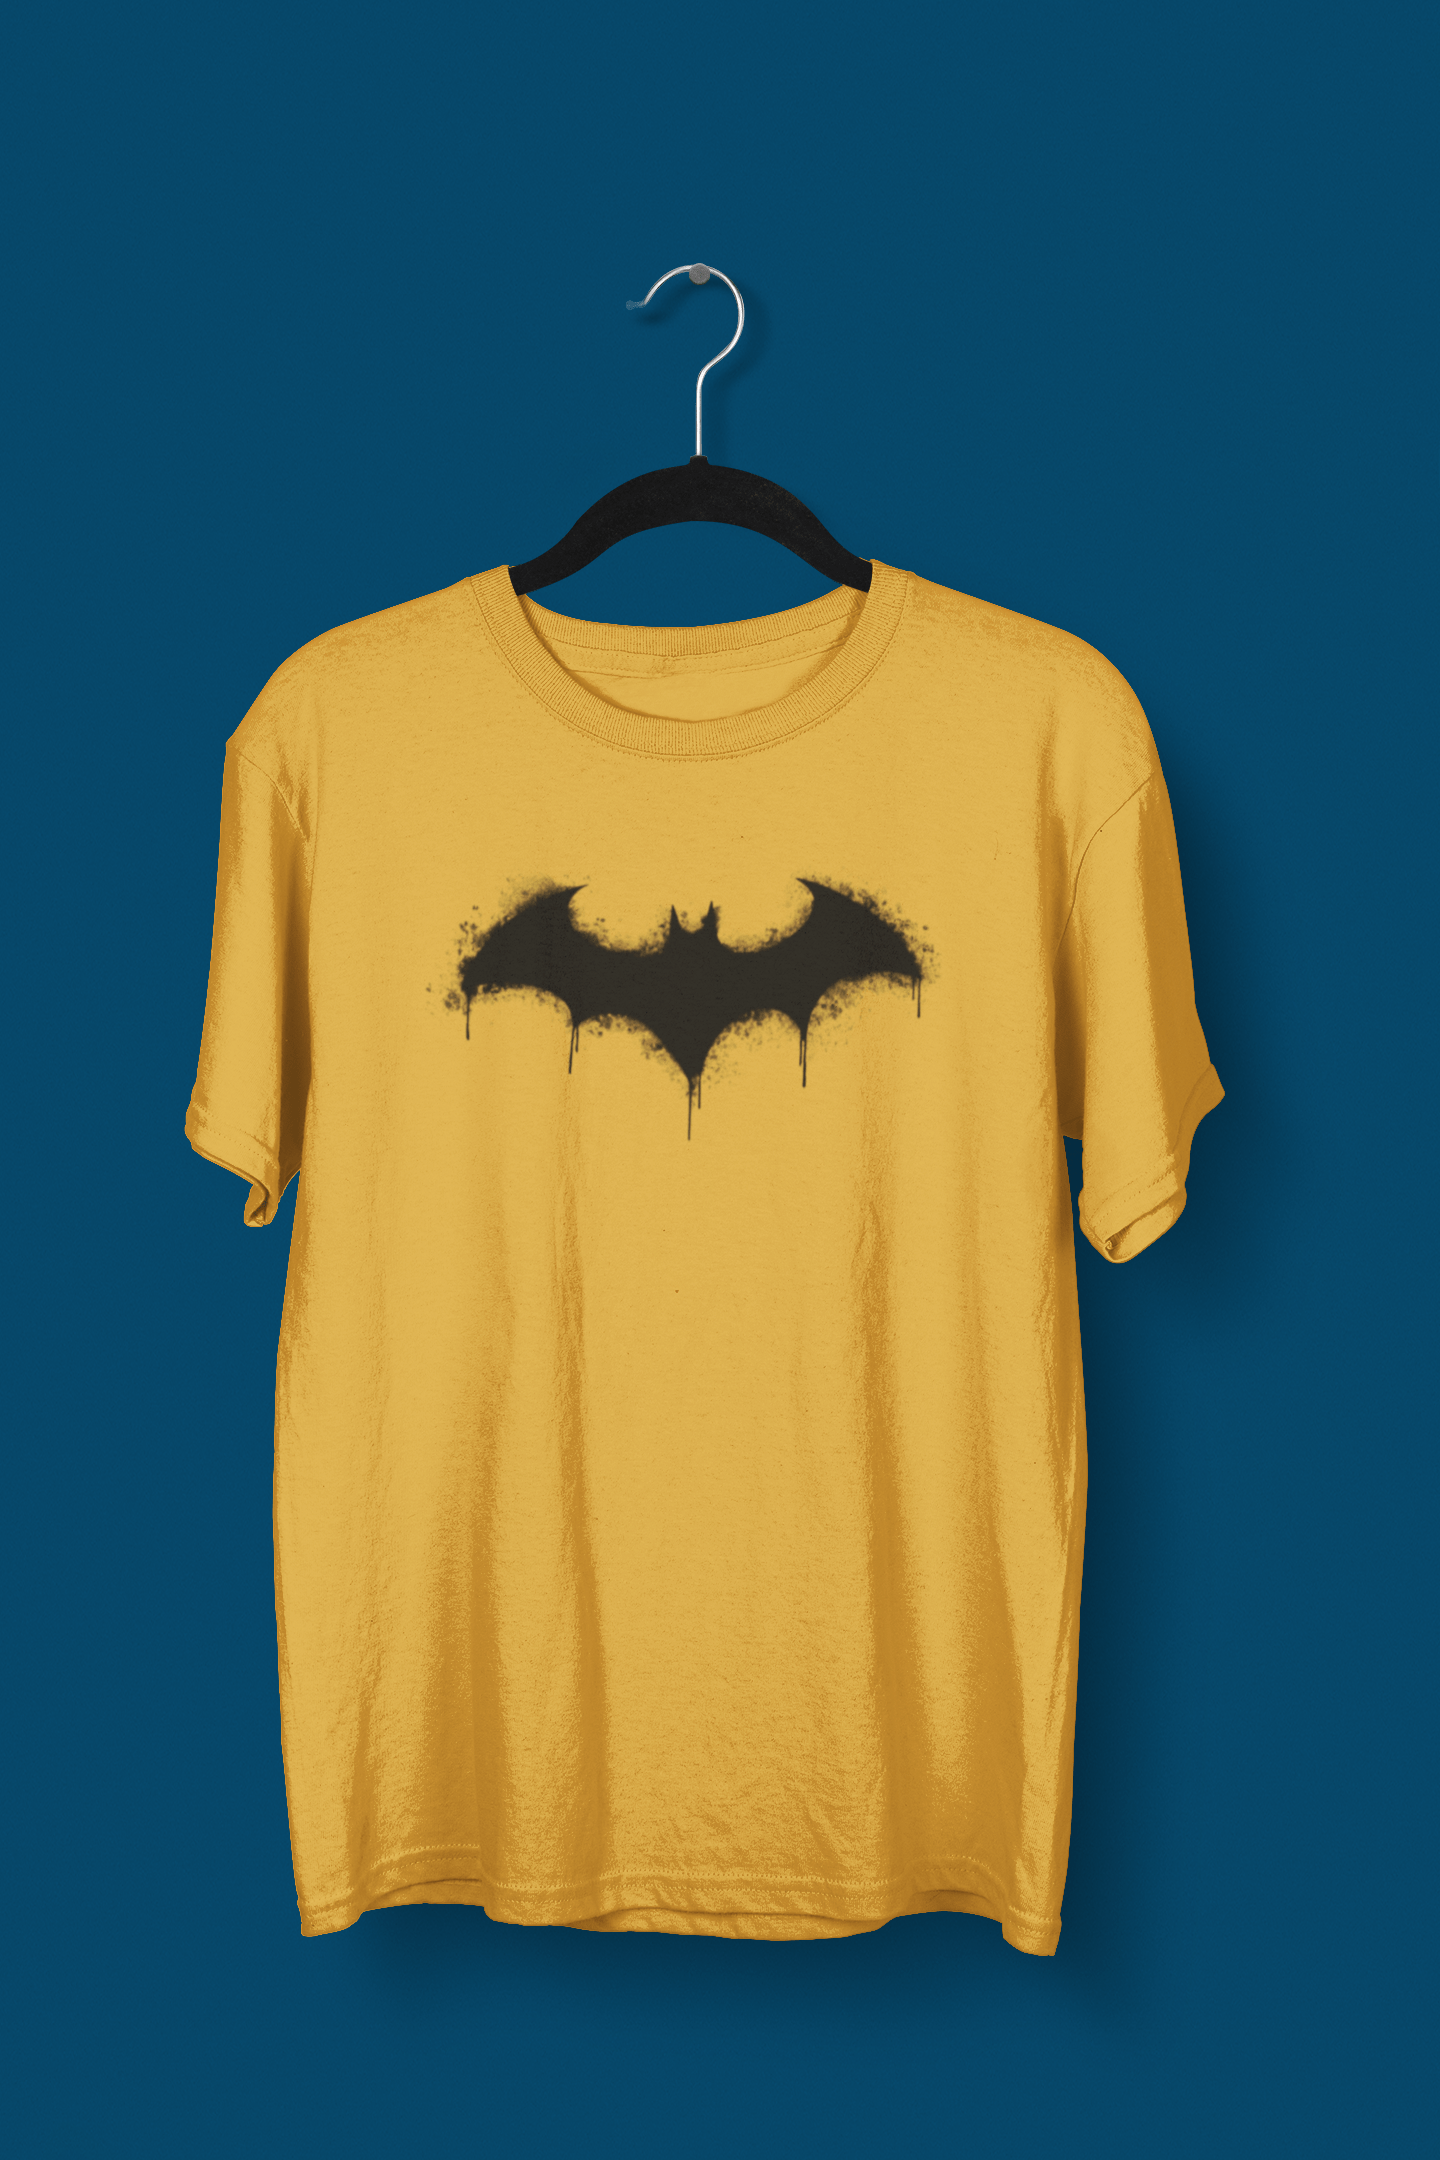 Cotton Addiz Men HD Print Batman T Shirt for Men at Rs 189 in Jaipur | ID:  27183325533